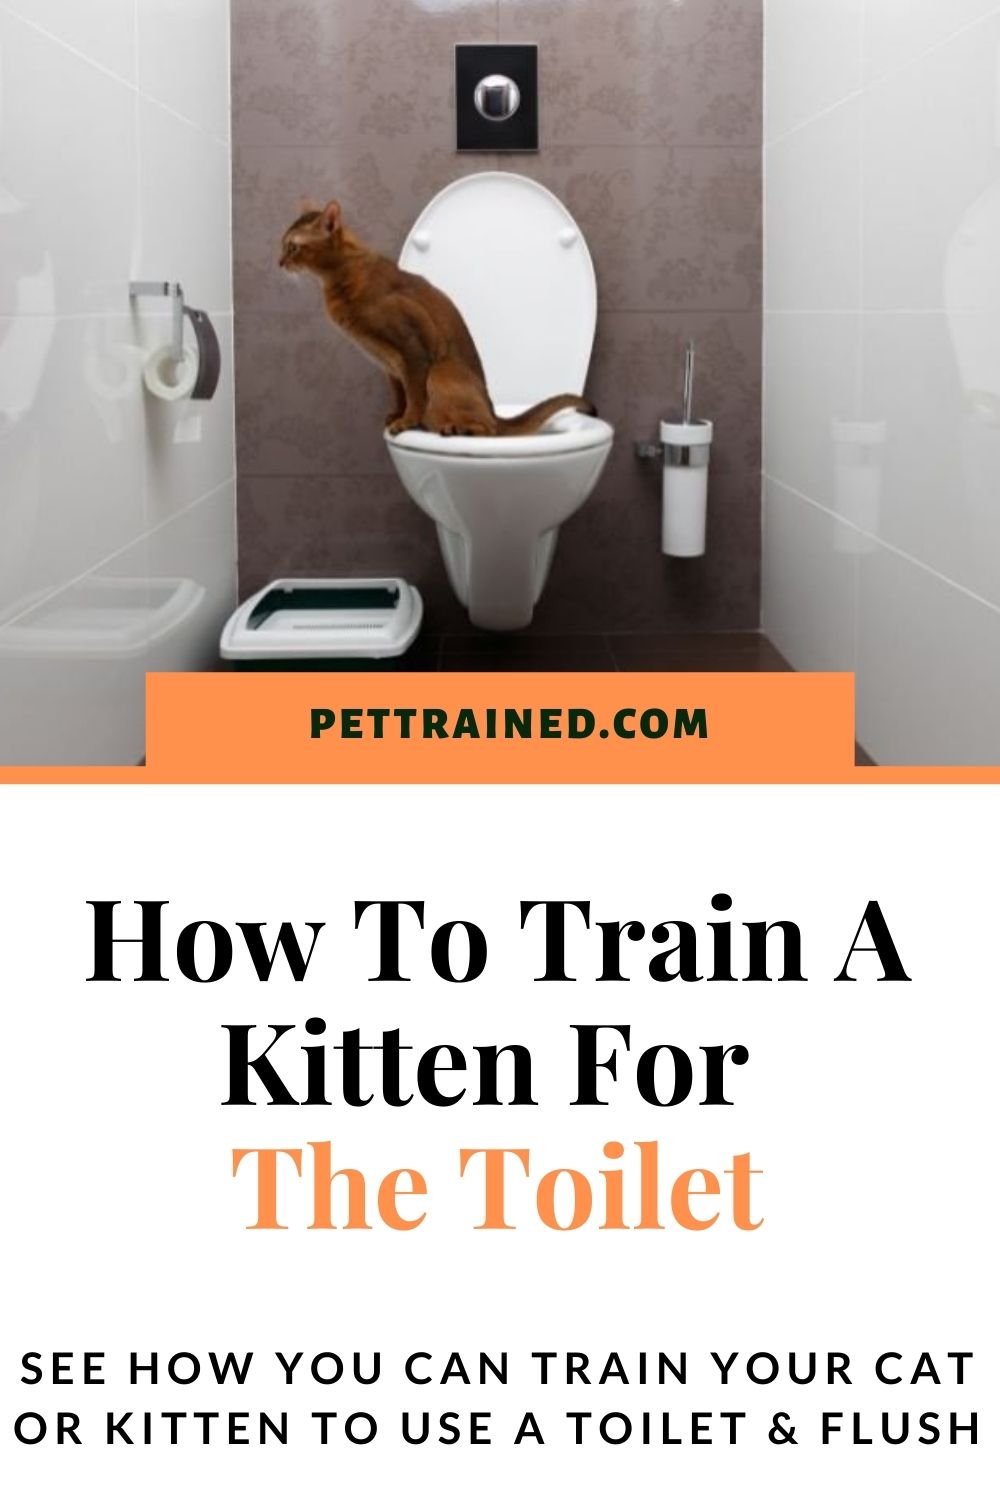 How to train kitten for toilet